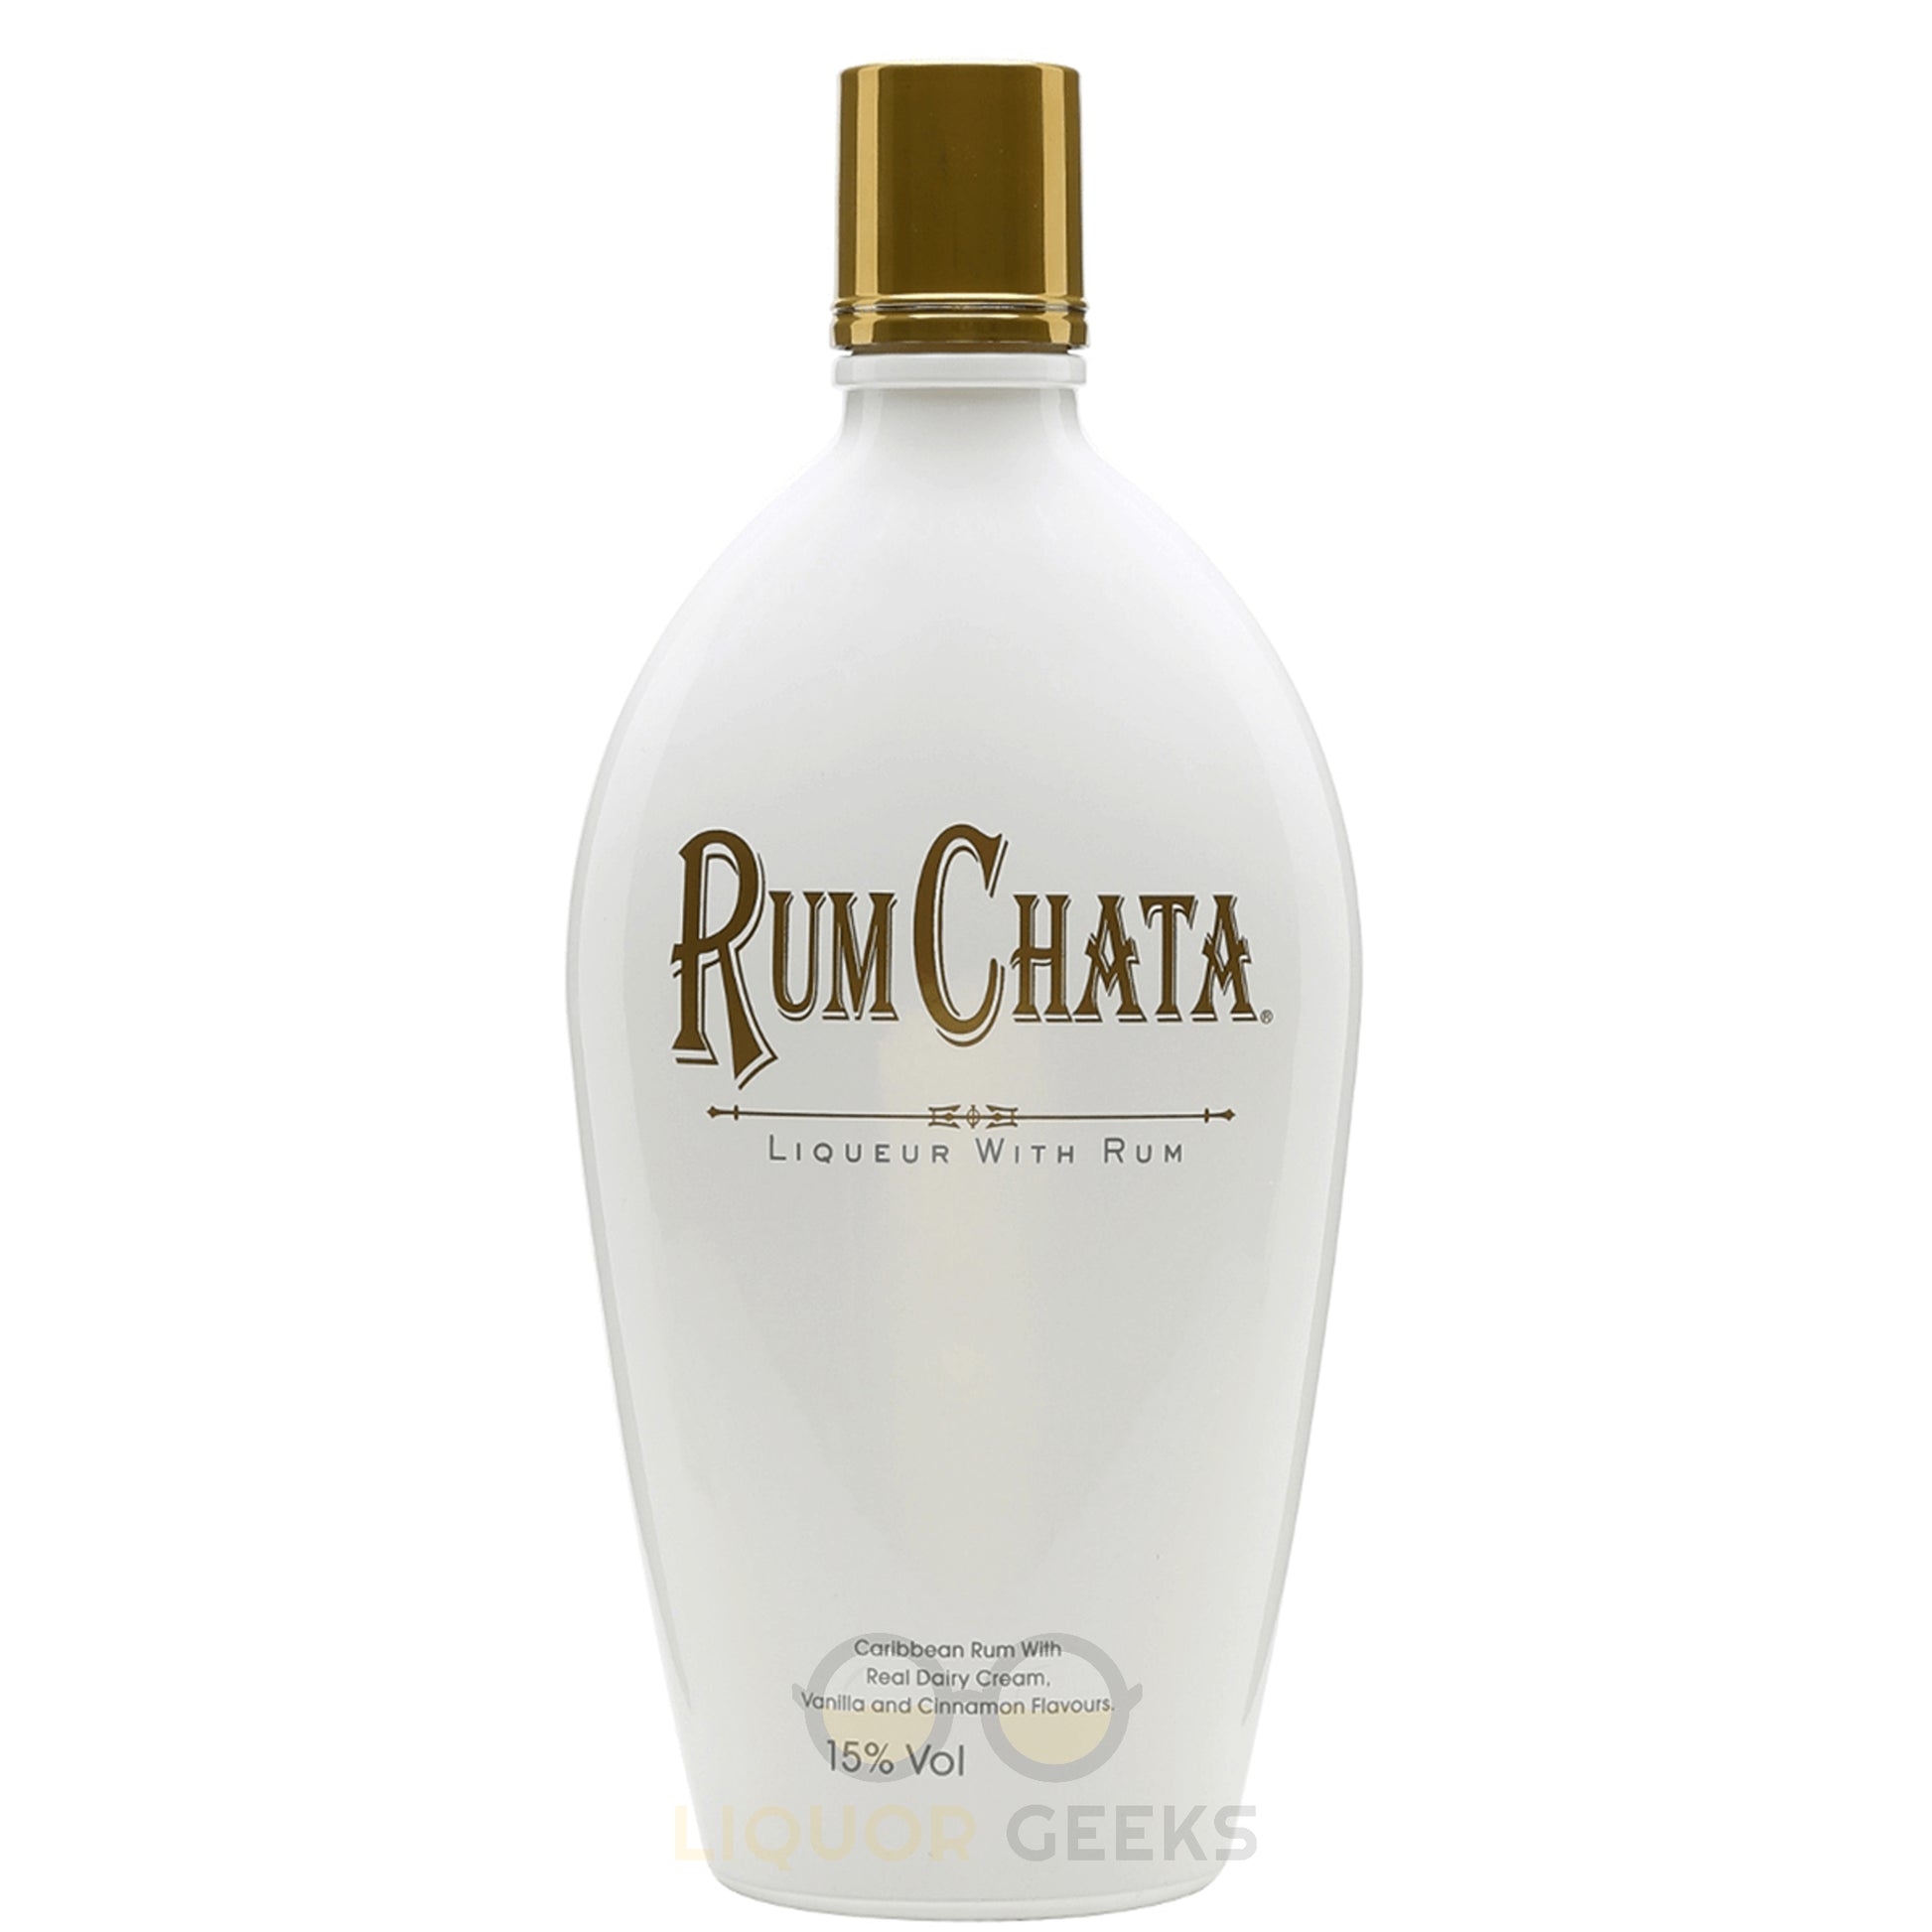 Rum Chata - Liquor Geeks